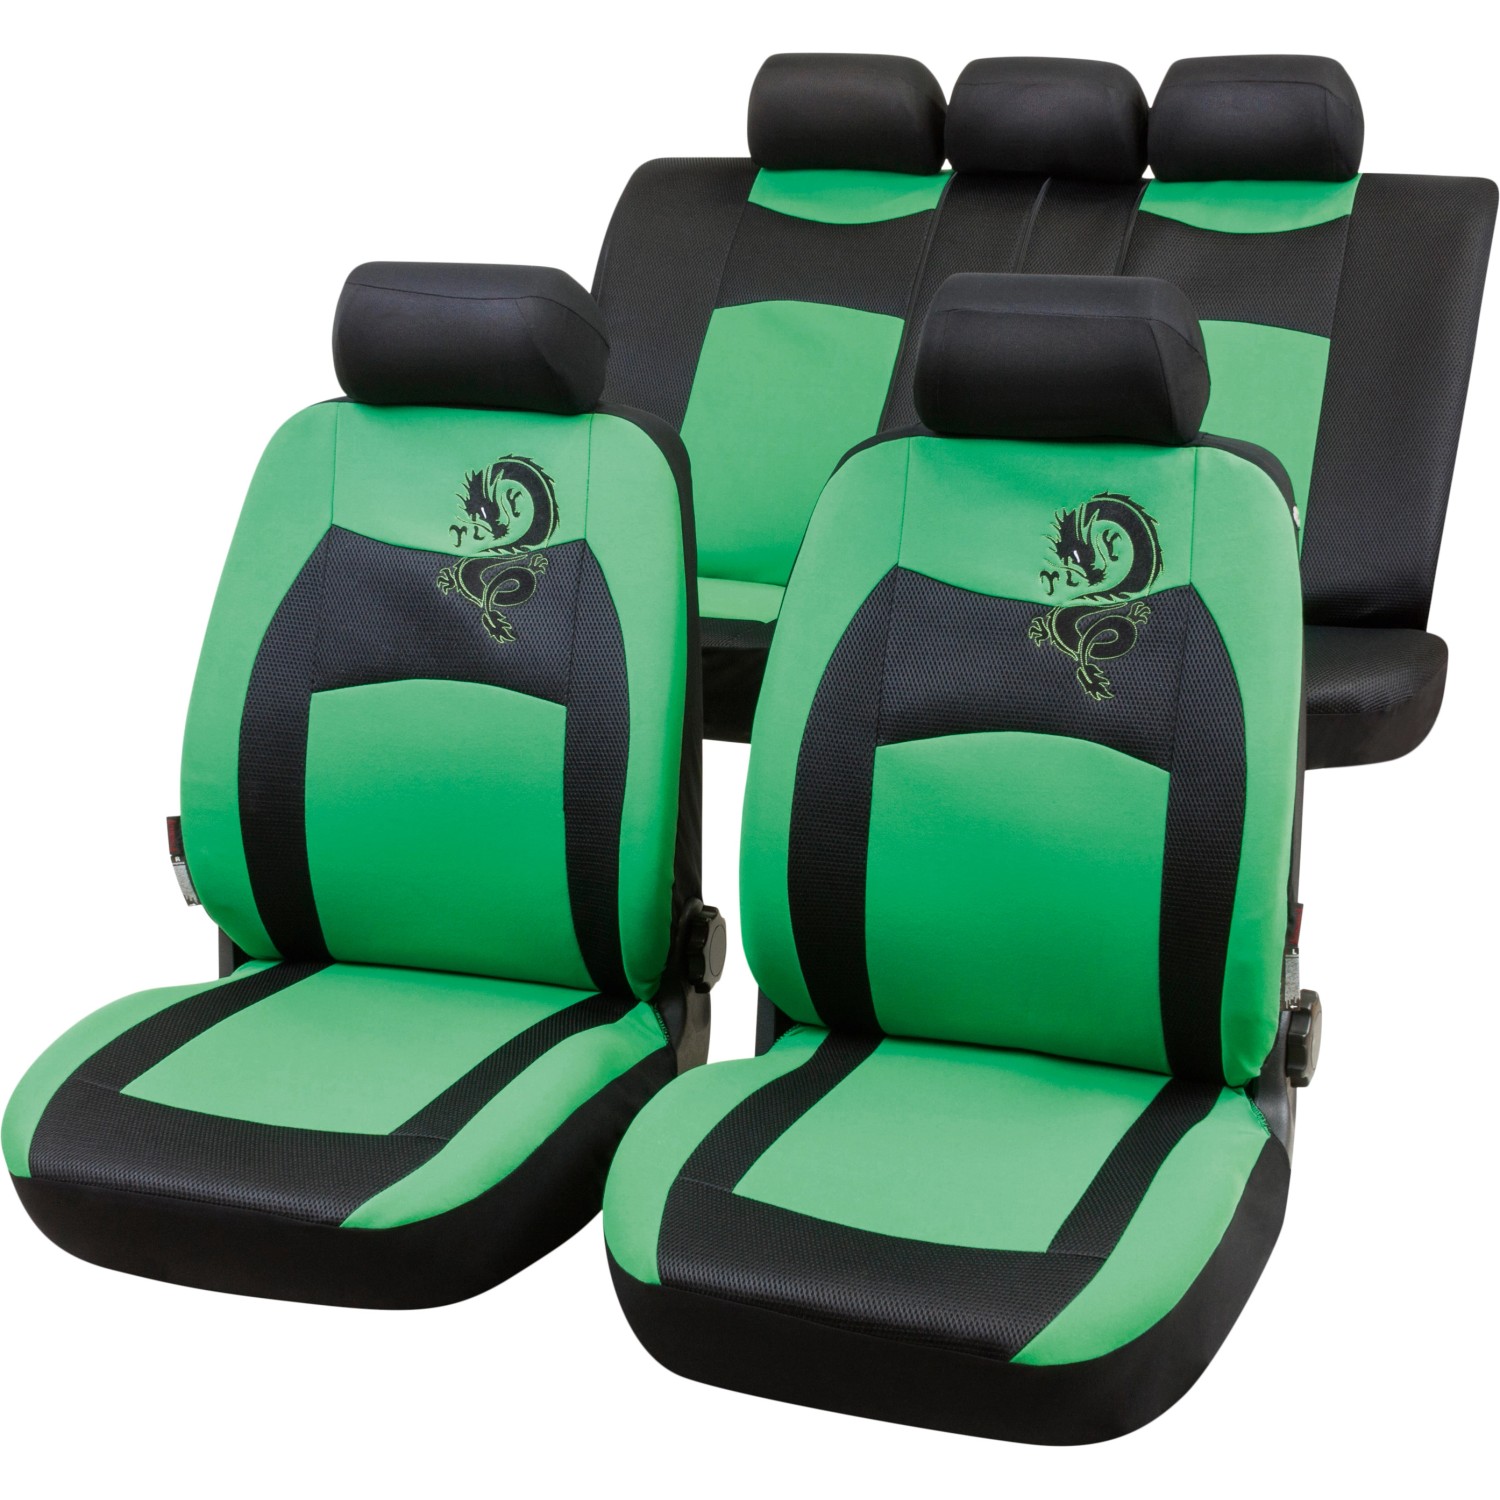 Auto-Sitzbezug-Set Reptilia 14-teilig Grün kaufen bei OBI